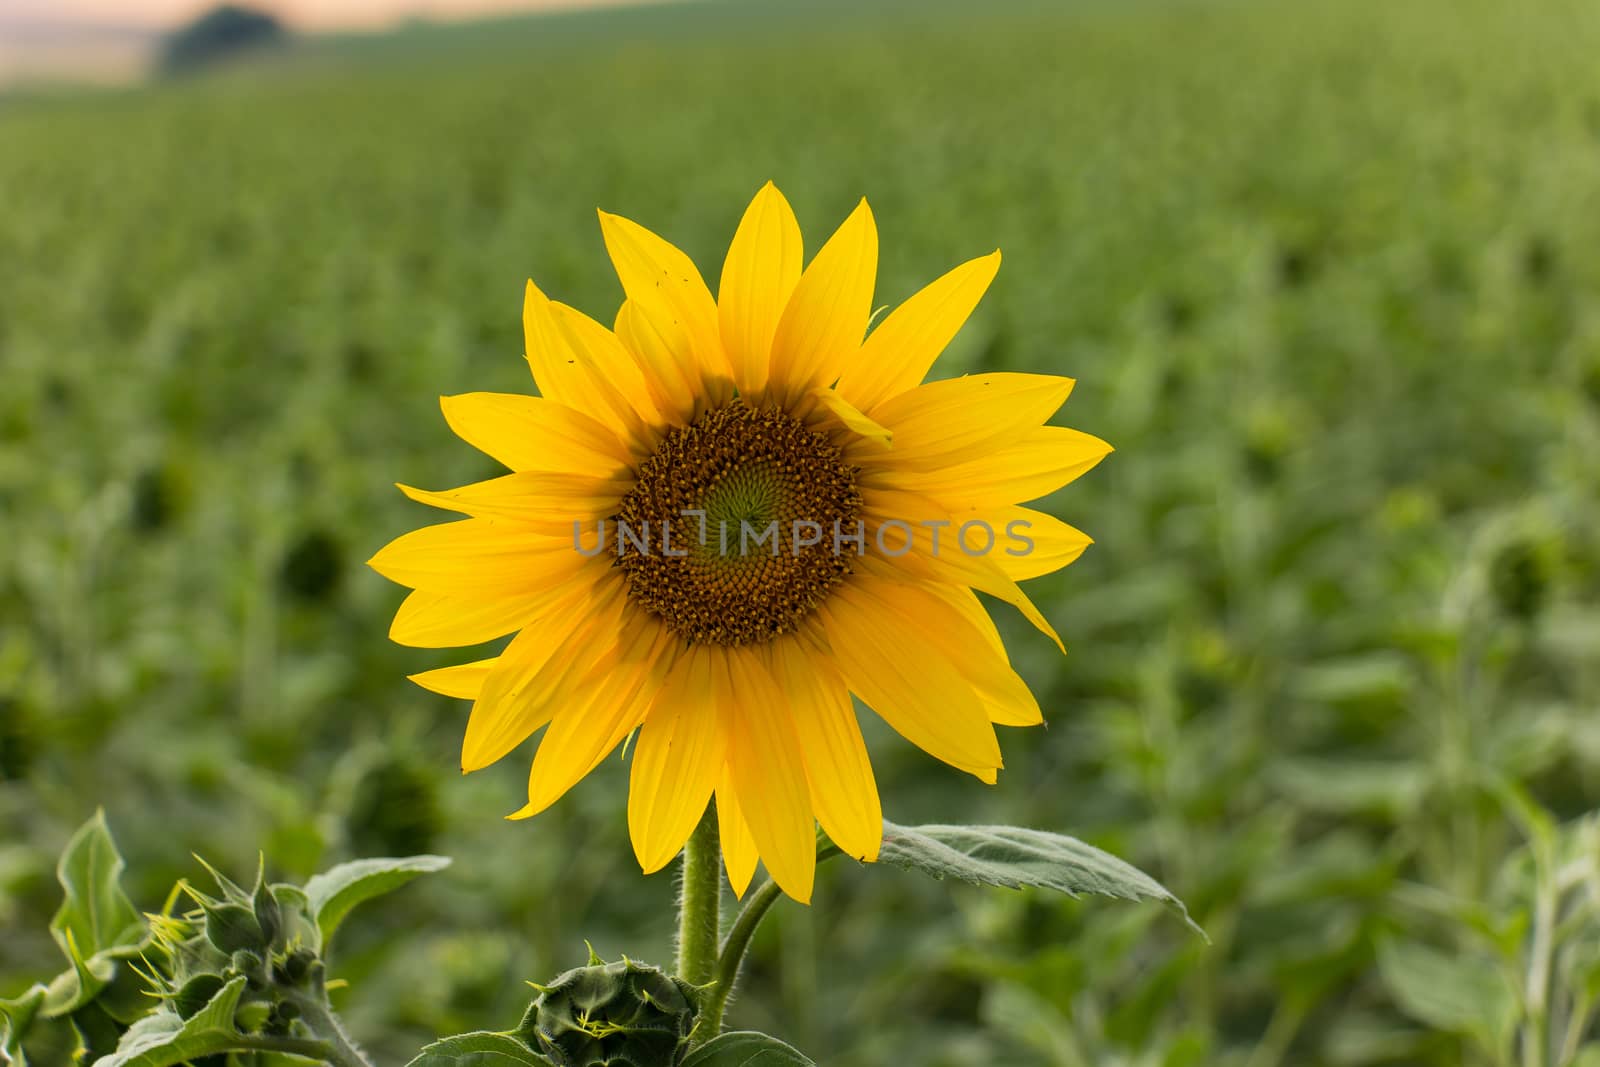 Sunflower field in sunny summer day